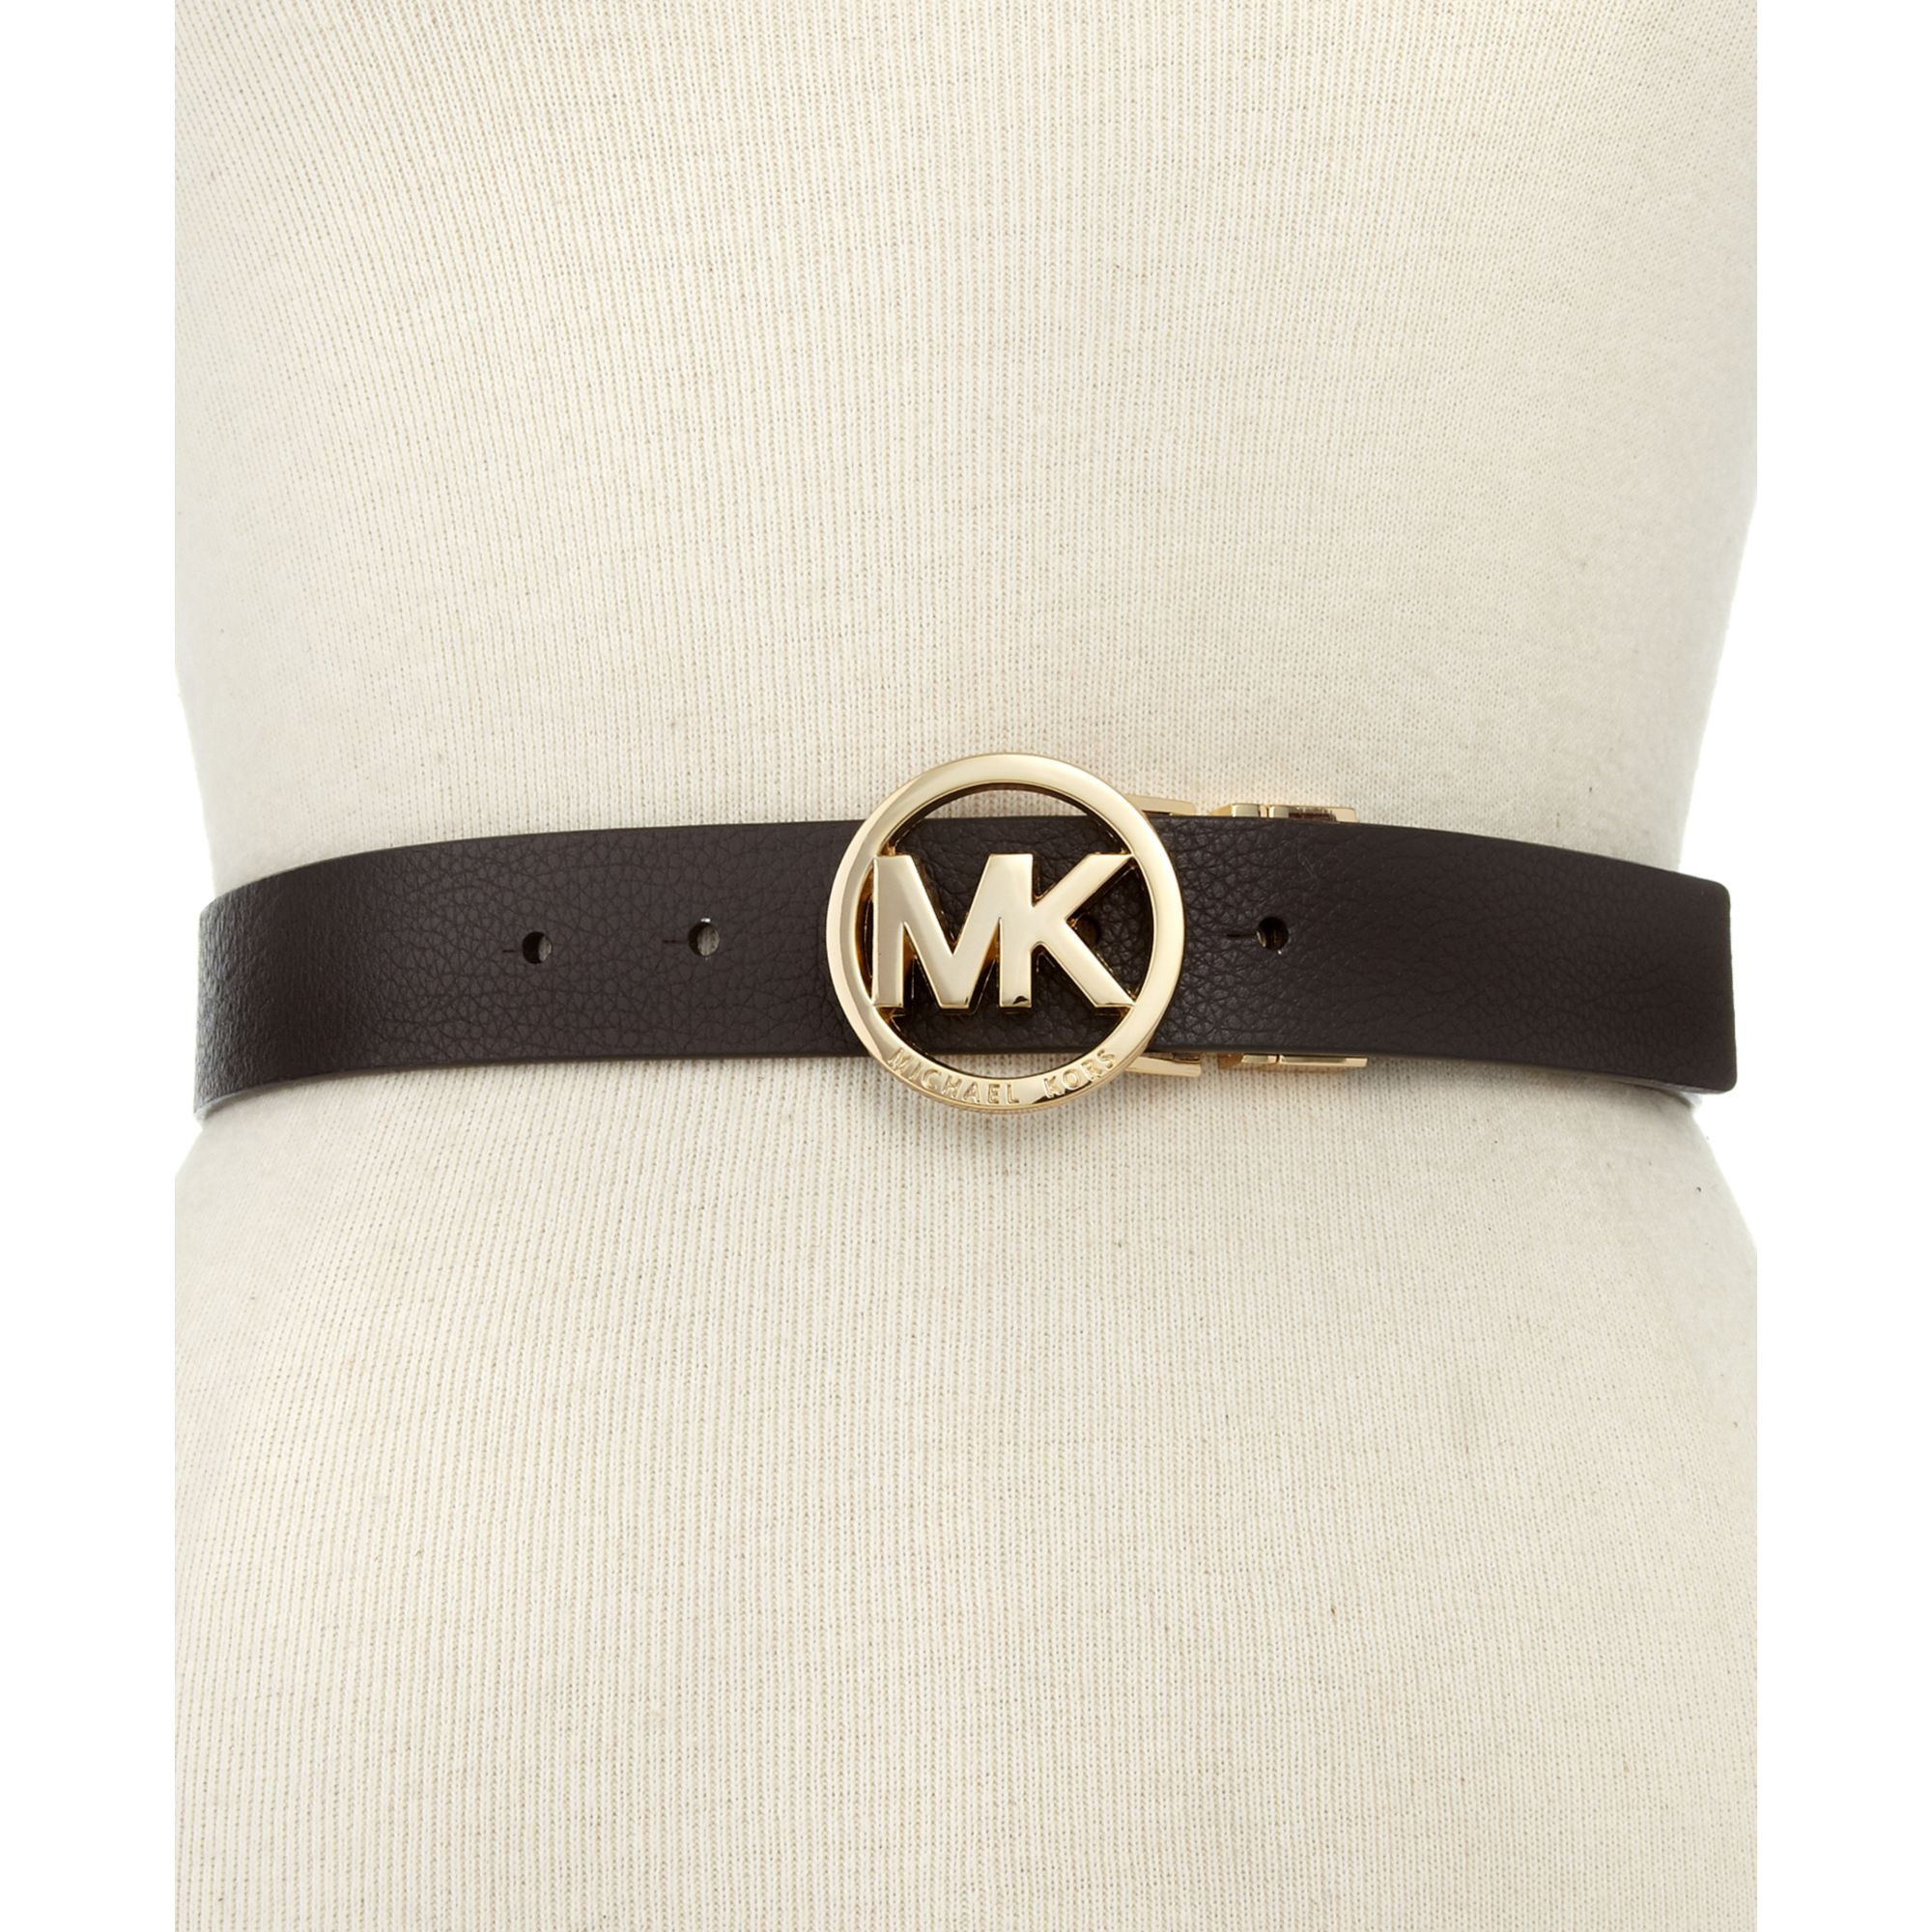 Michael Kors Reversible Logo Belt in Black (black/pewter)